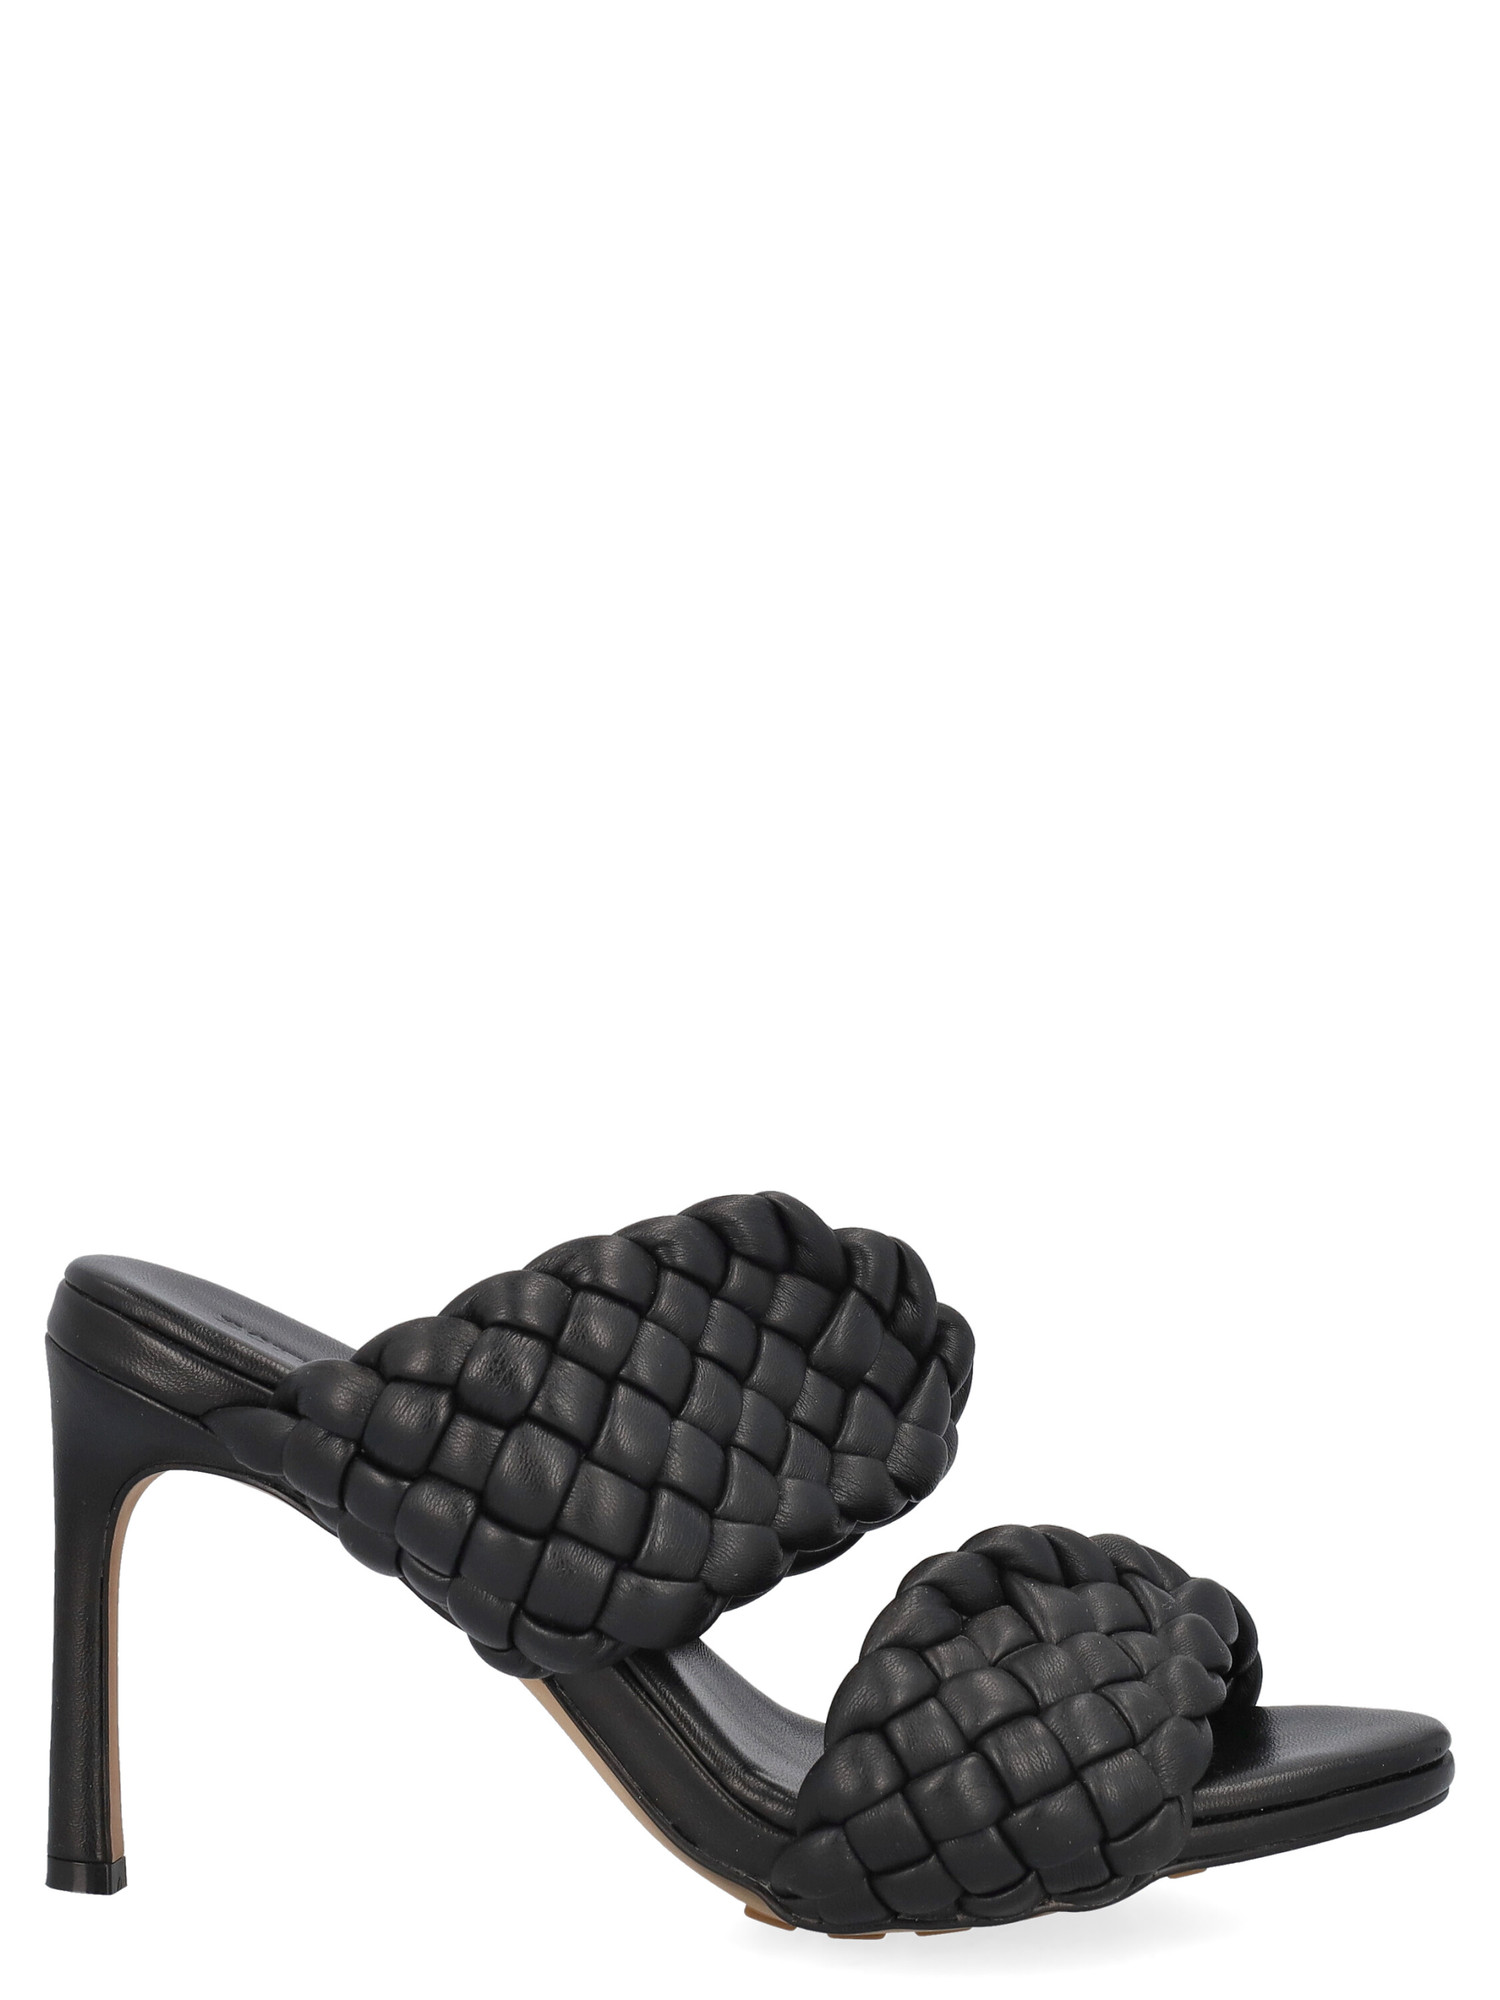 Sandales Pour Femme - Bottega Veneta - En Leather Black - Taille: IT 38 - EU 38